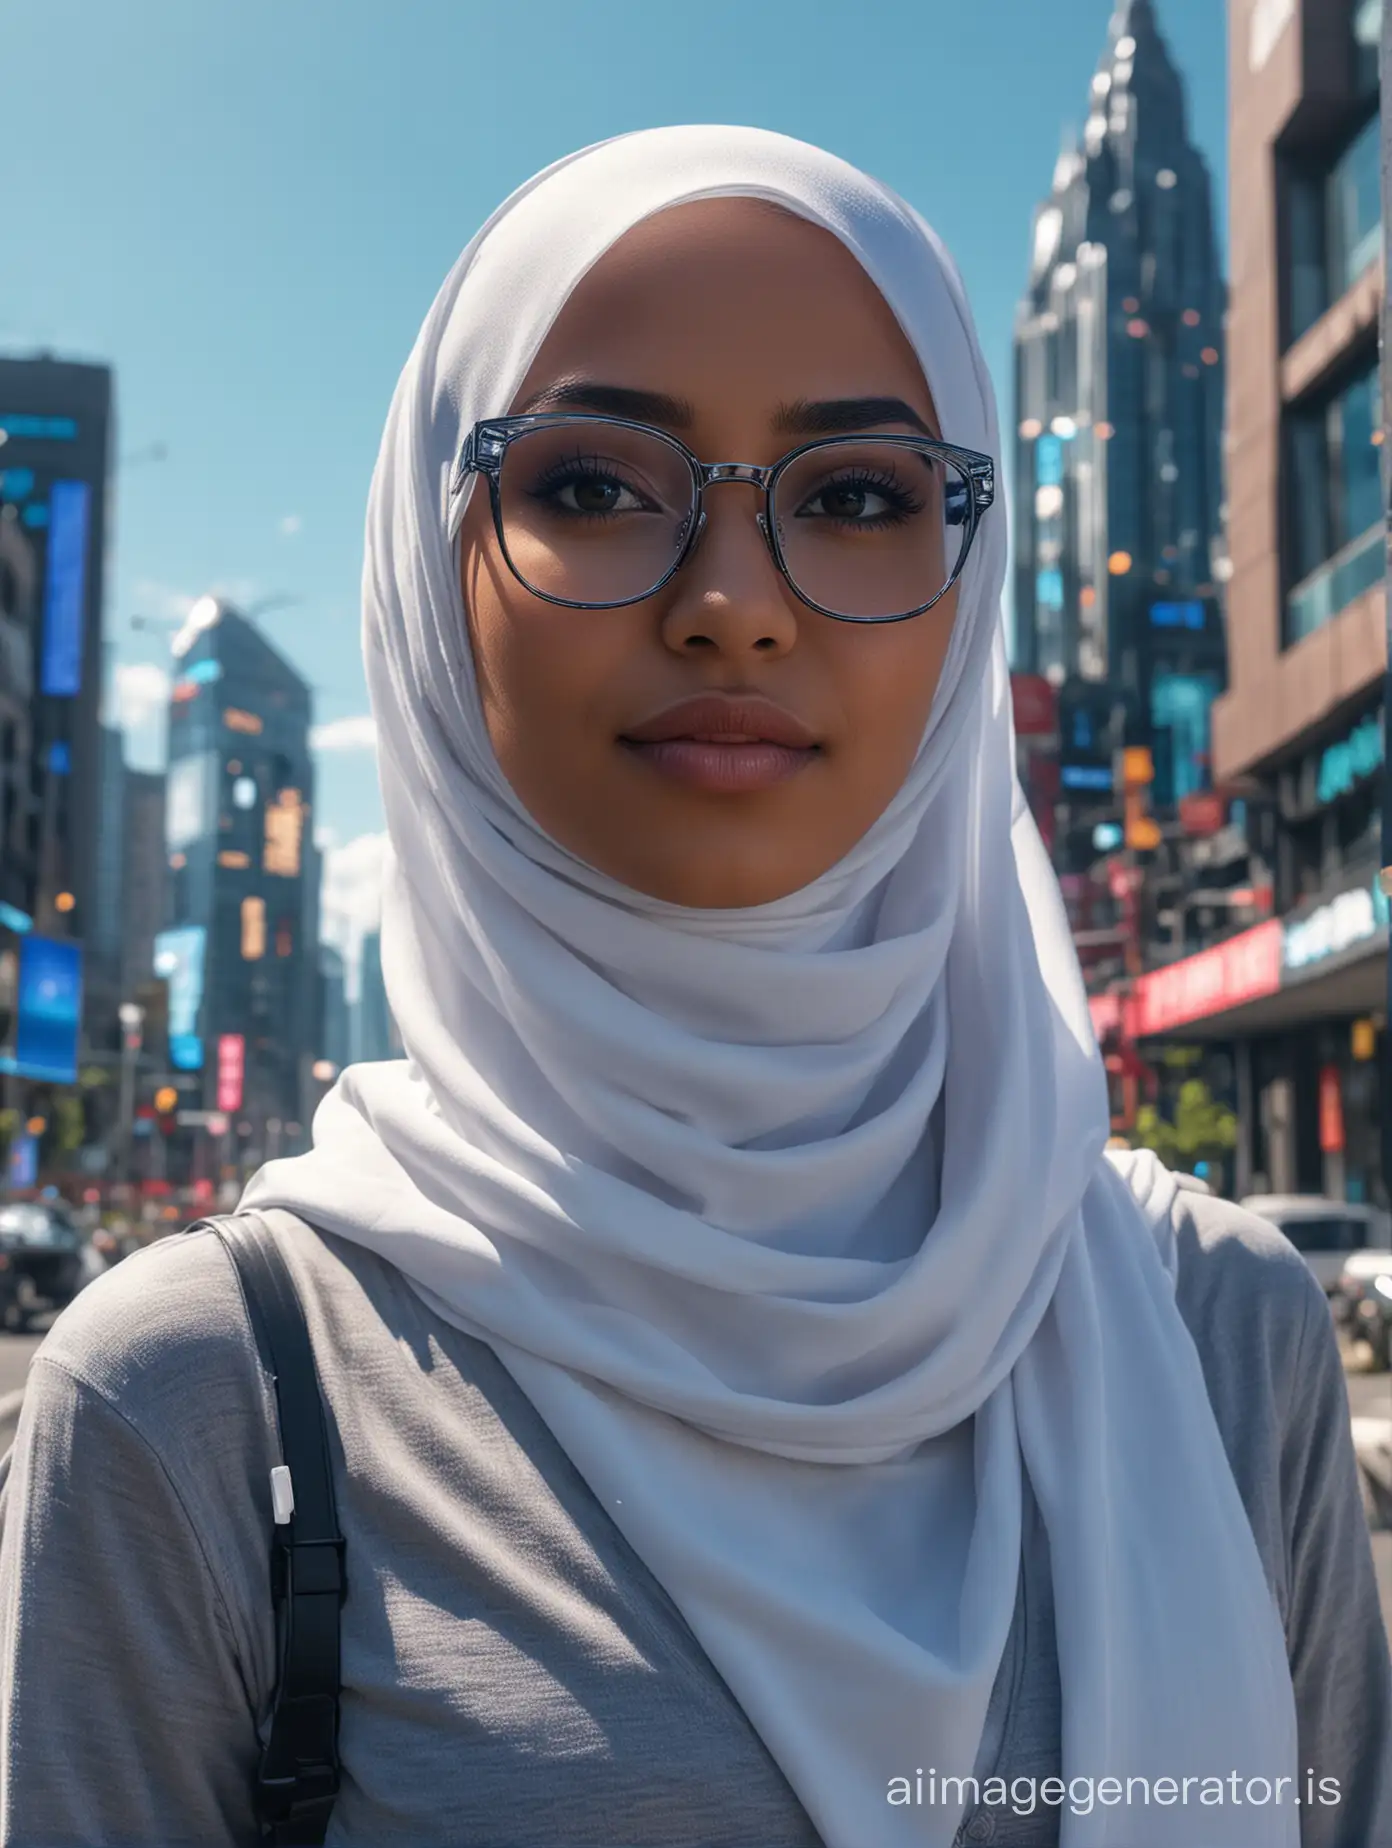 Stylish-Muslim-Woman-with-Glasses-and-Hijab-in-Futuristic-Cyberpunk-Park